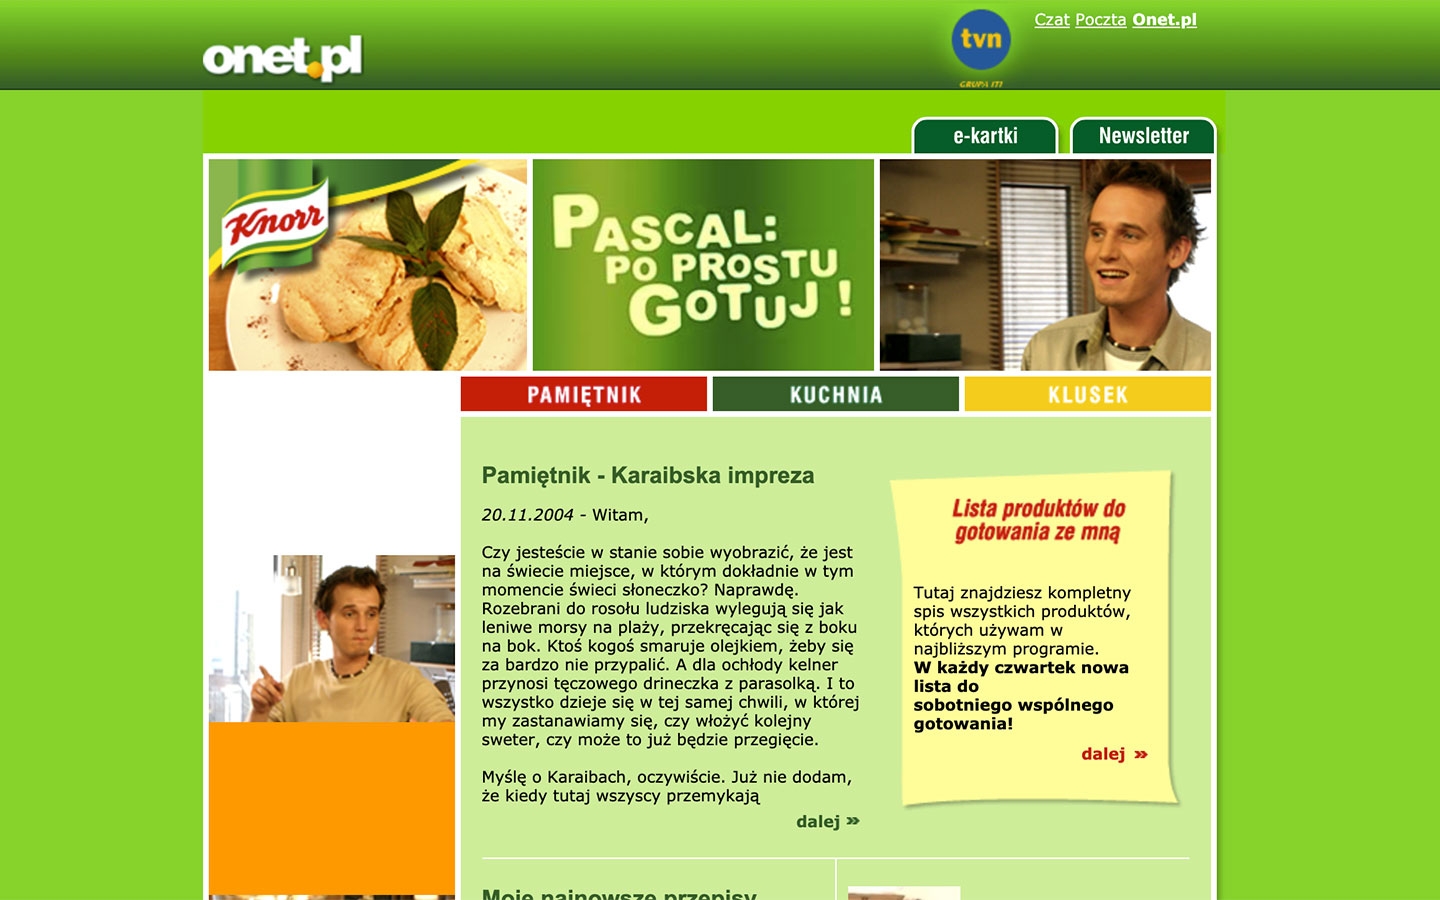 Pascal: Po Prostu Gotuj! | poprostugotuj.onet.pl | 2004 (Screen Only 01) © echonet communication